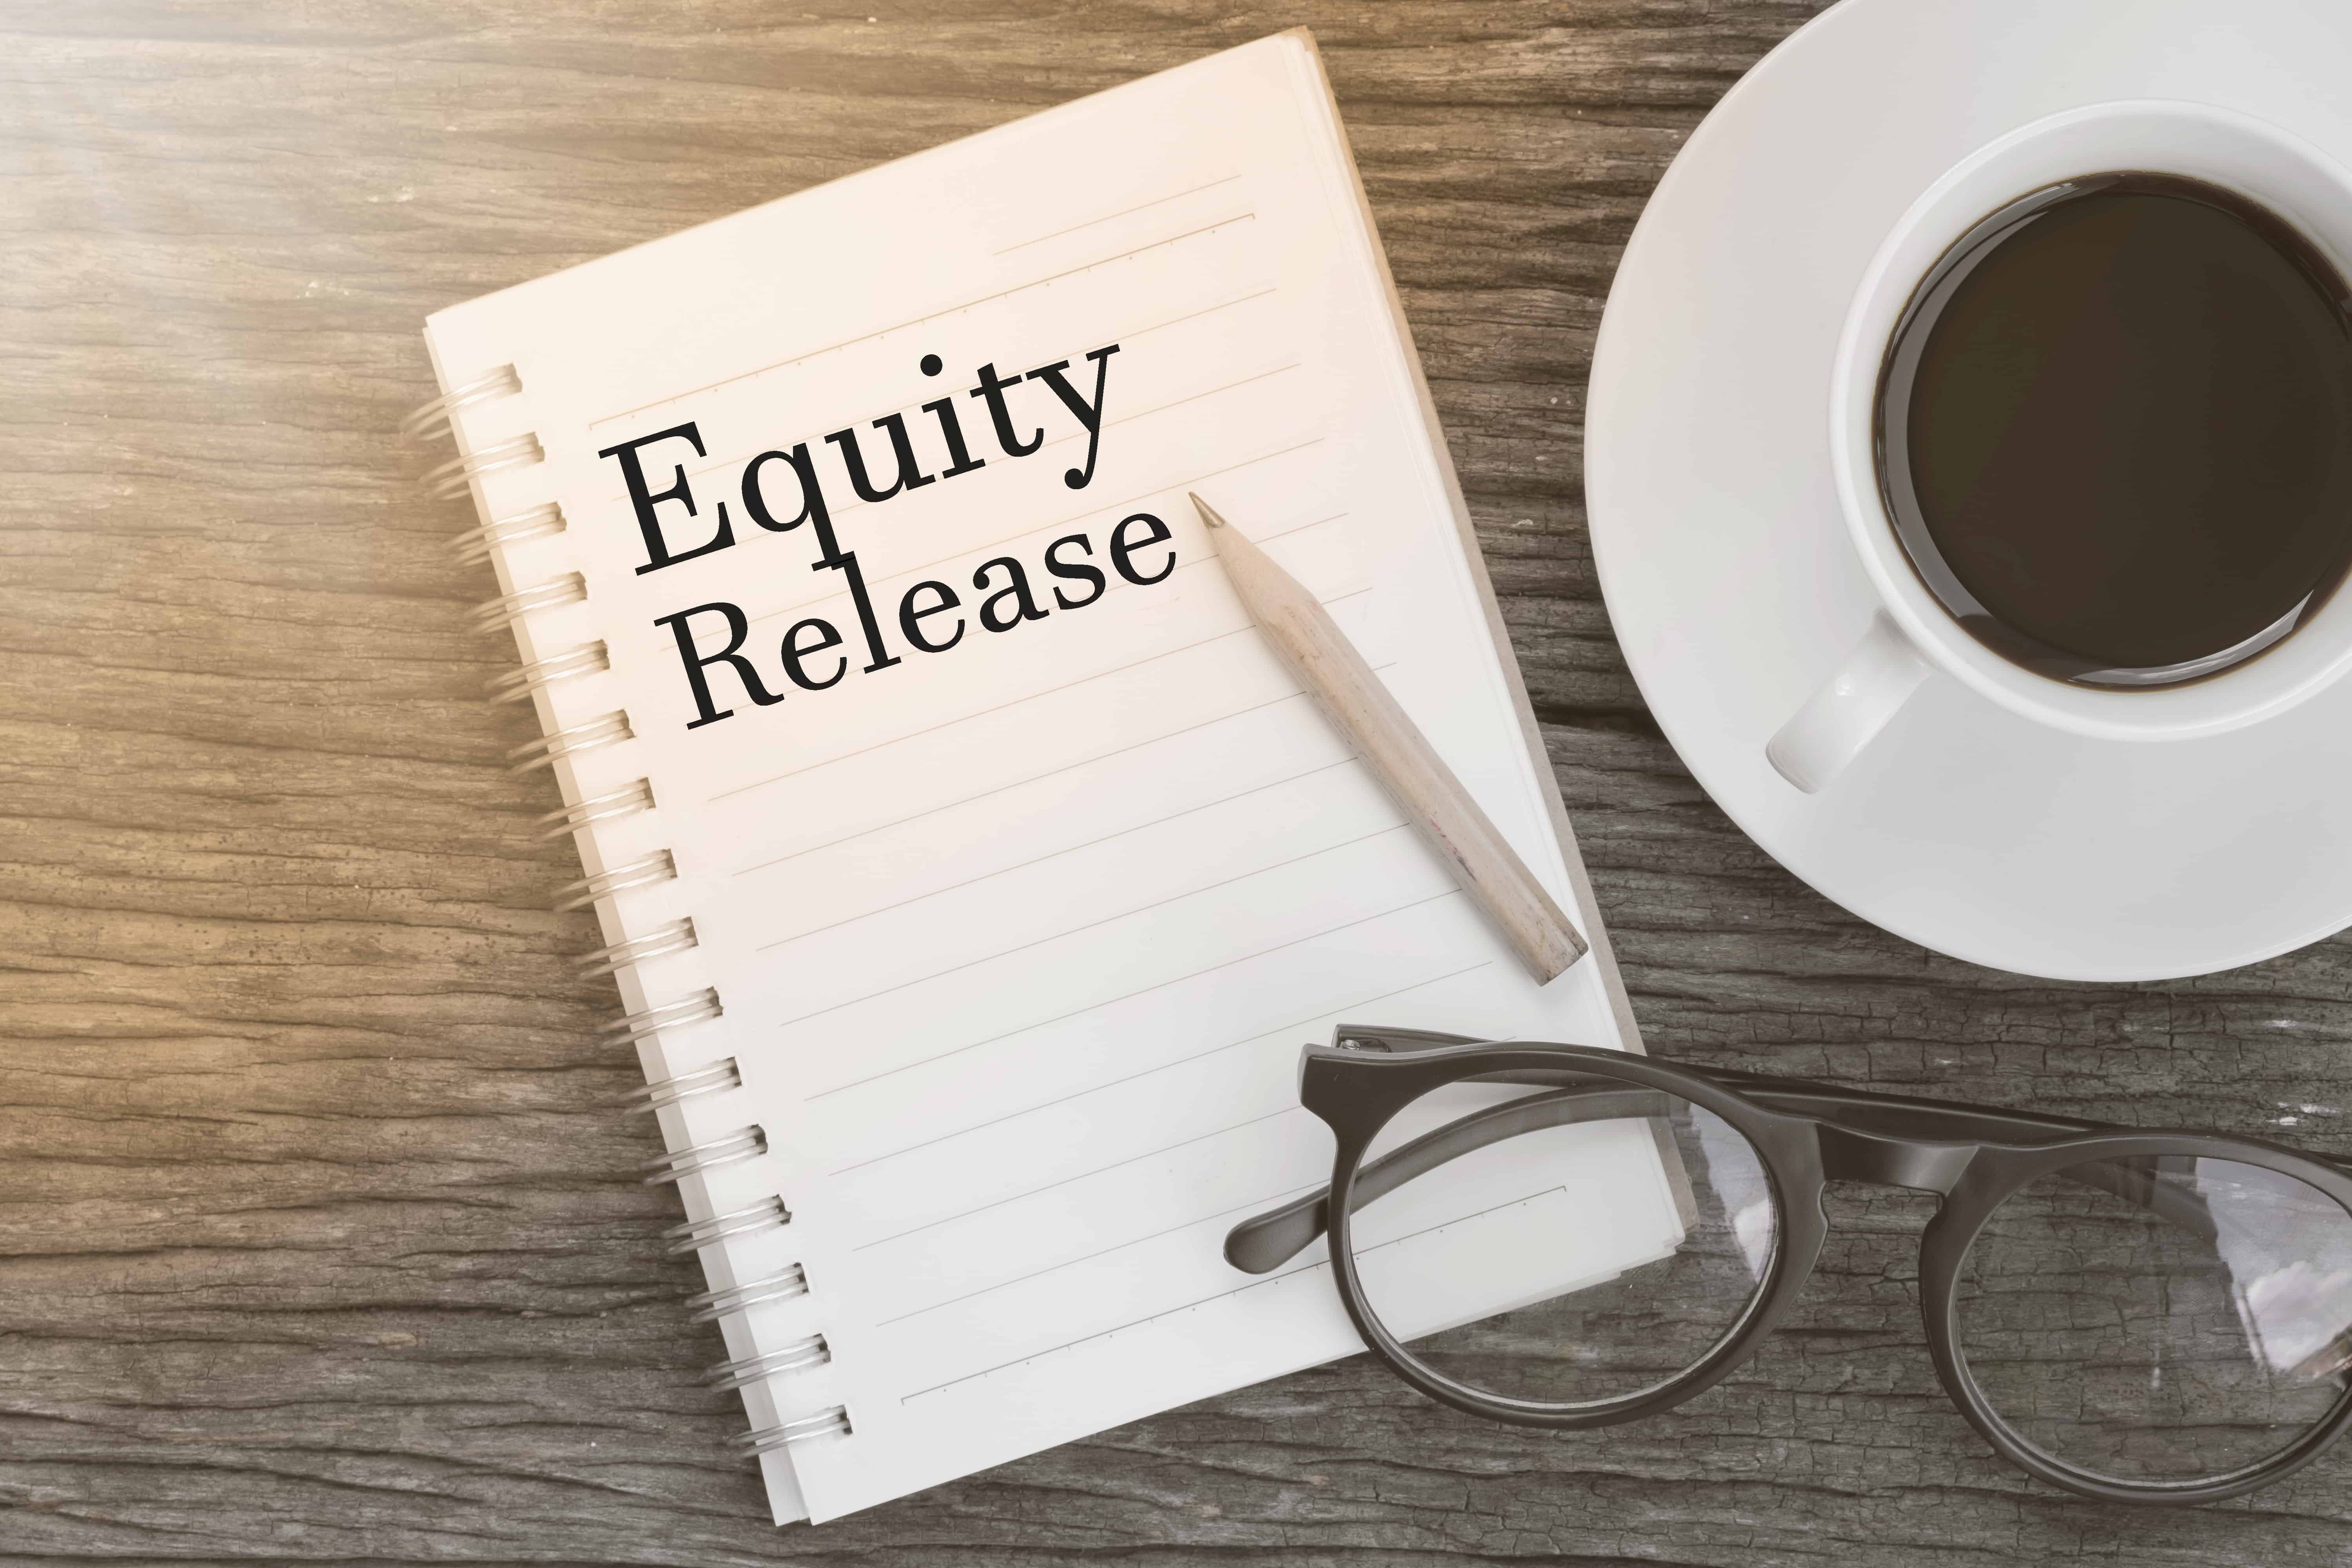 Equity Release Associates launches acquisition initiative